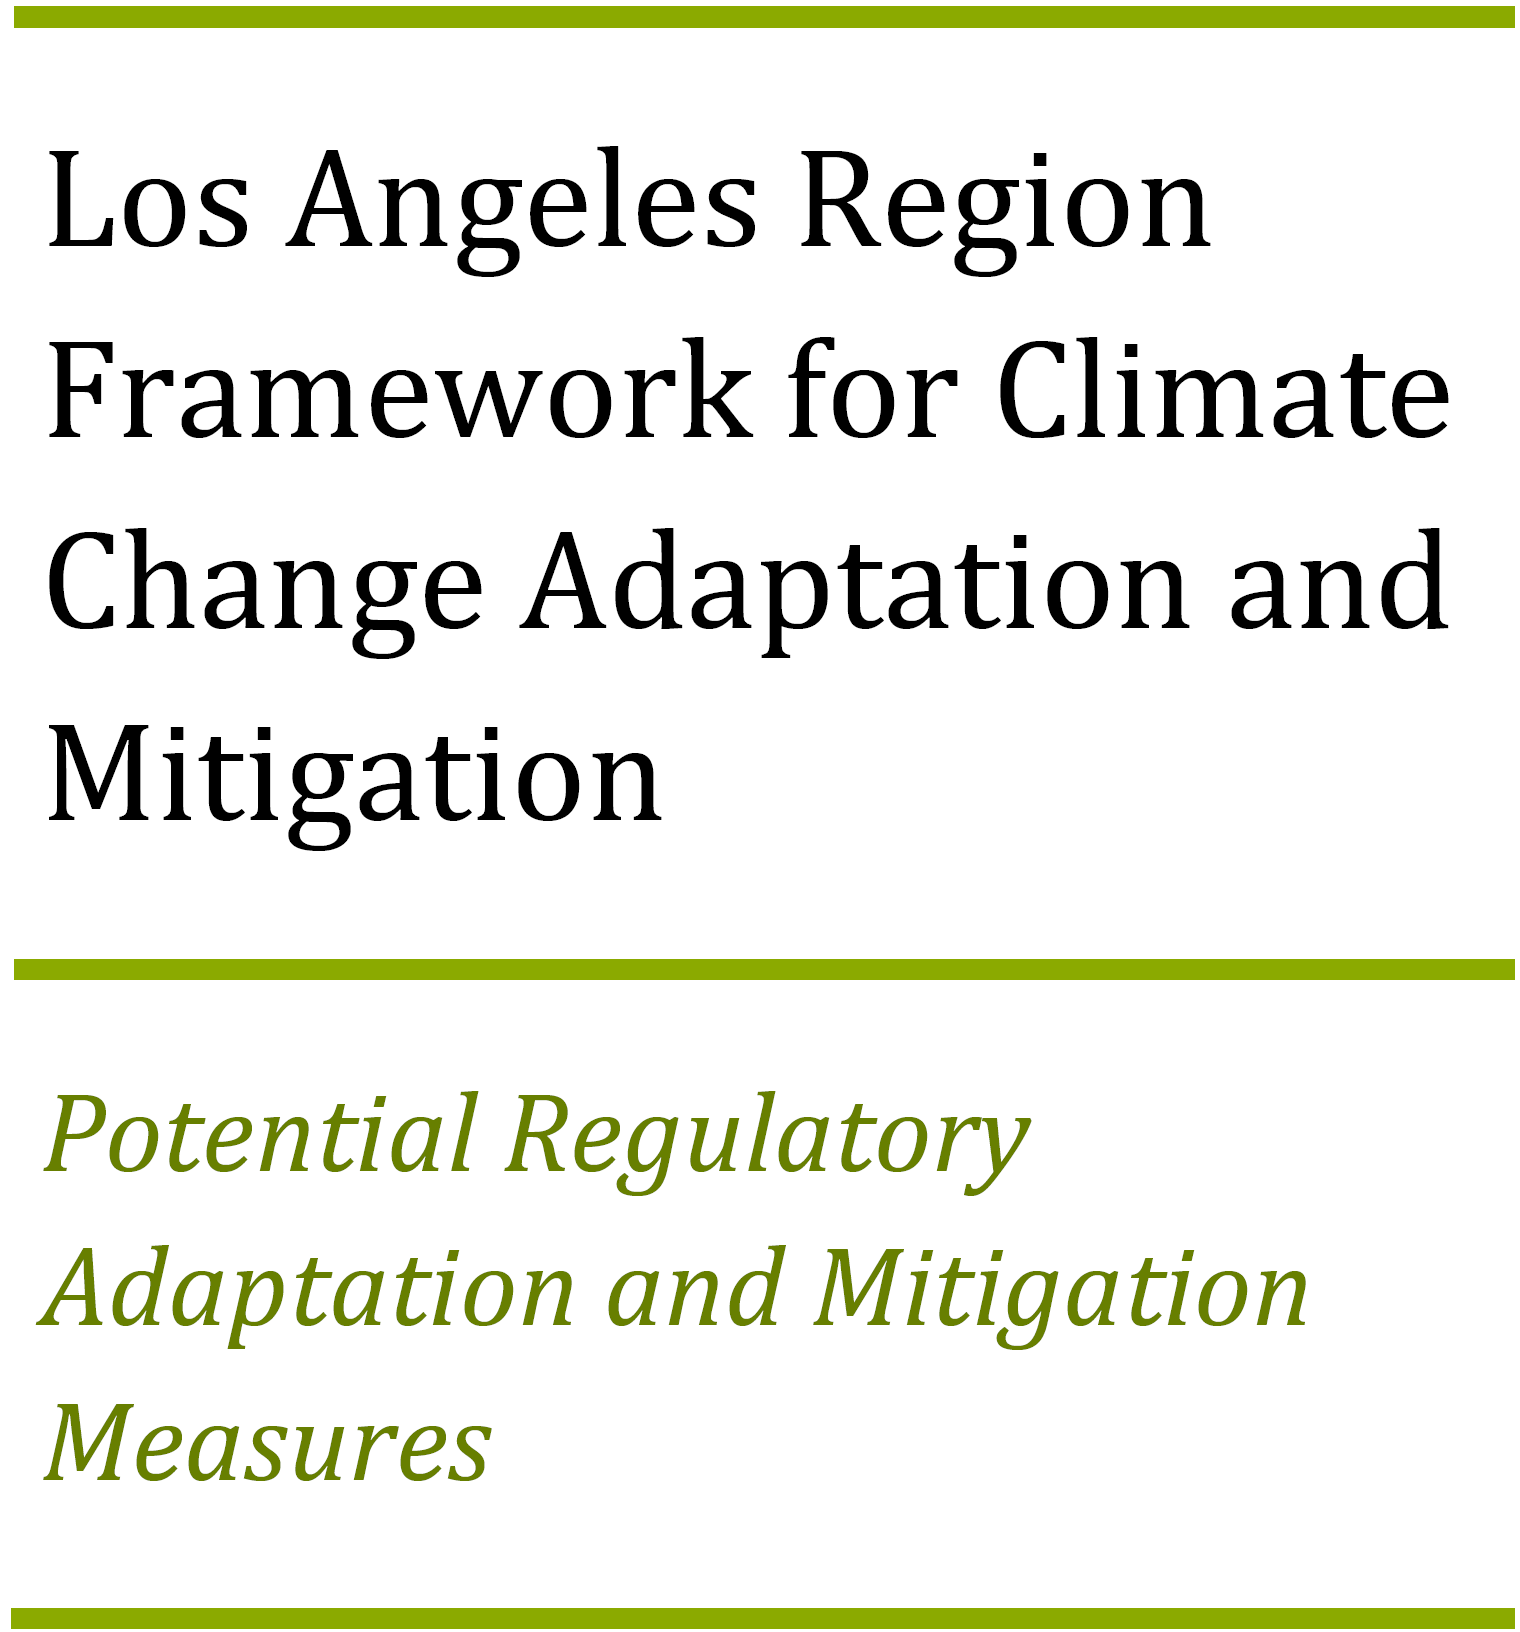 Los  Angeles Region Framework for Climate Change Adaptation and Mitigation - Potential Regulatory
Adaptation and Mitigation
Measures